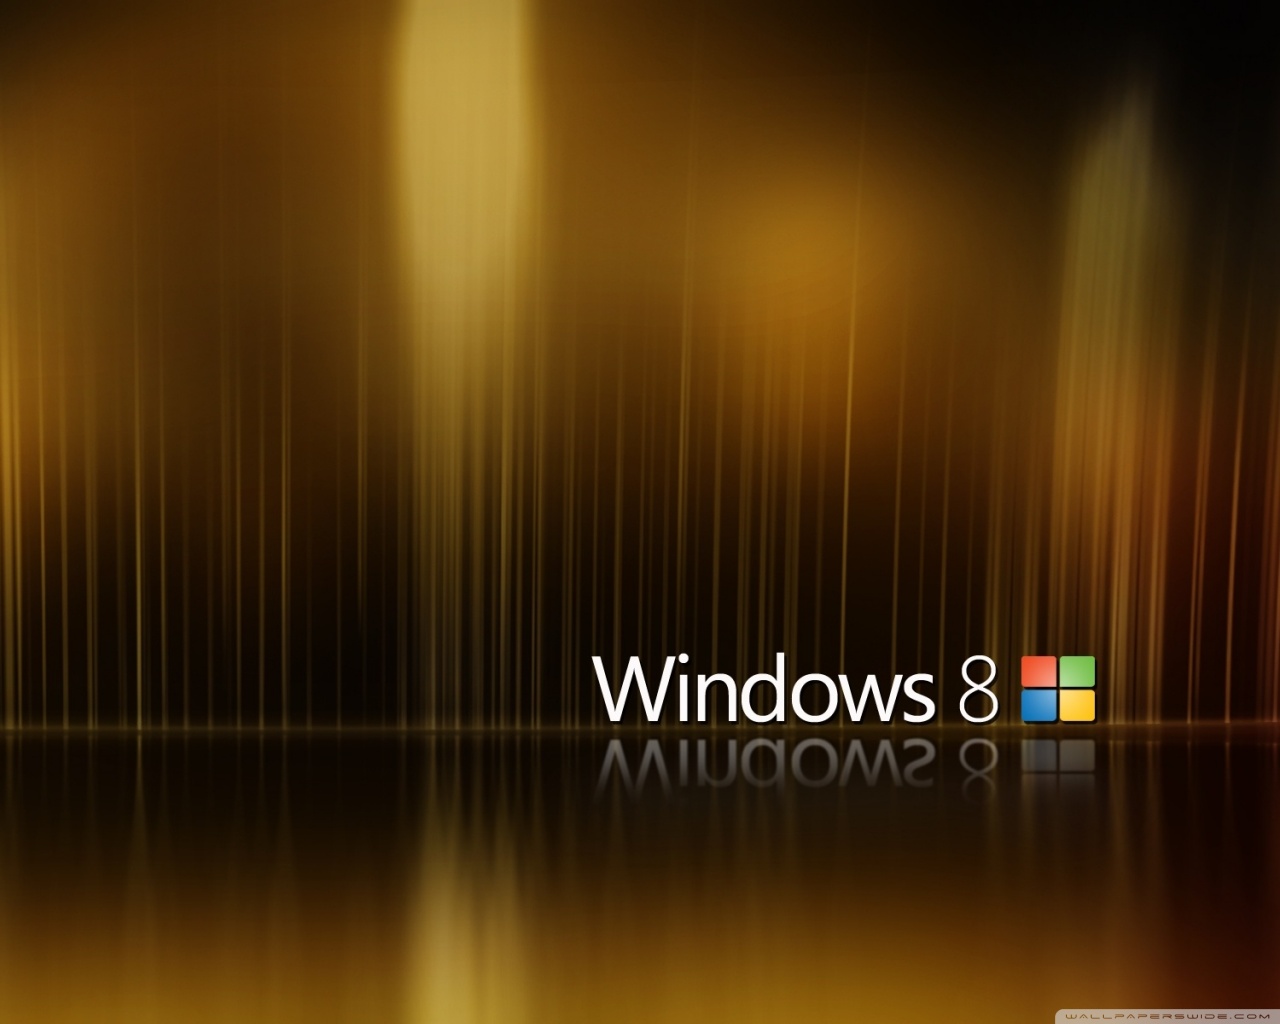 preview of Microsoft windows 8 wallpaper.jpg